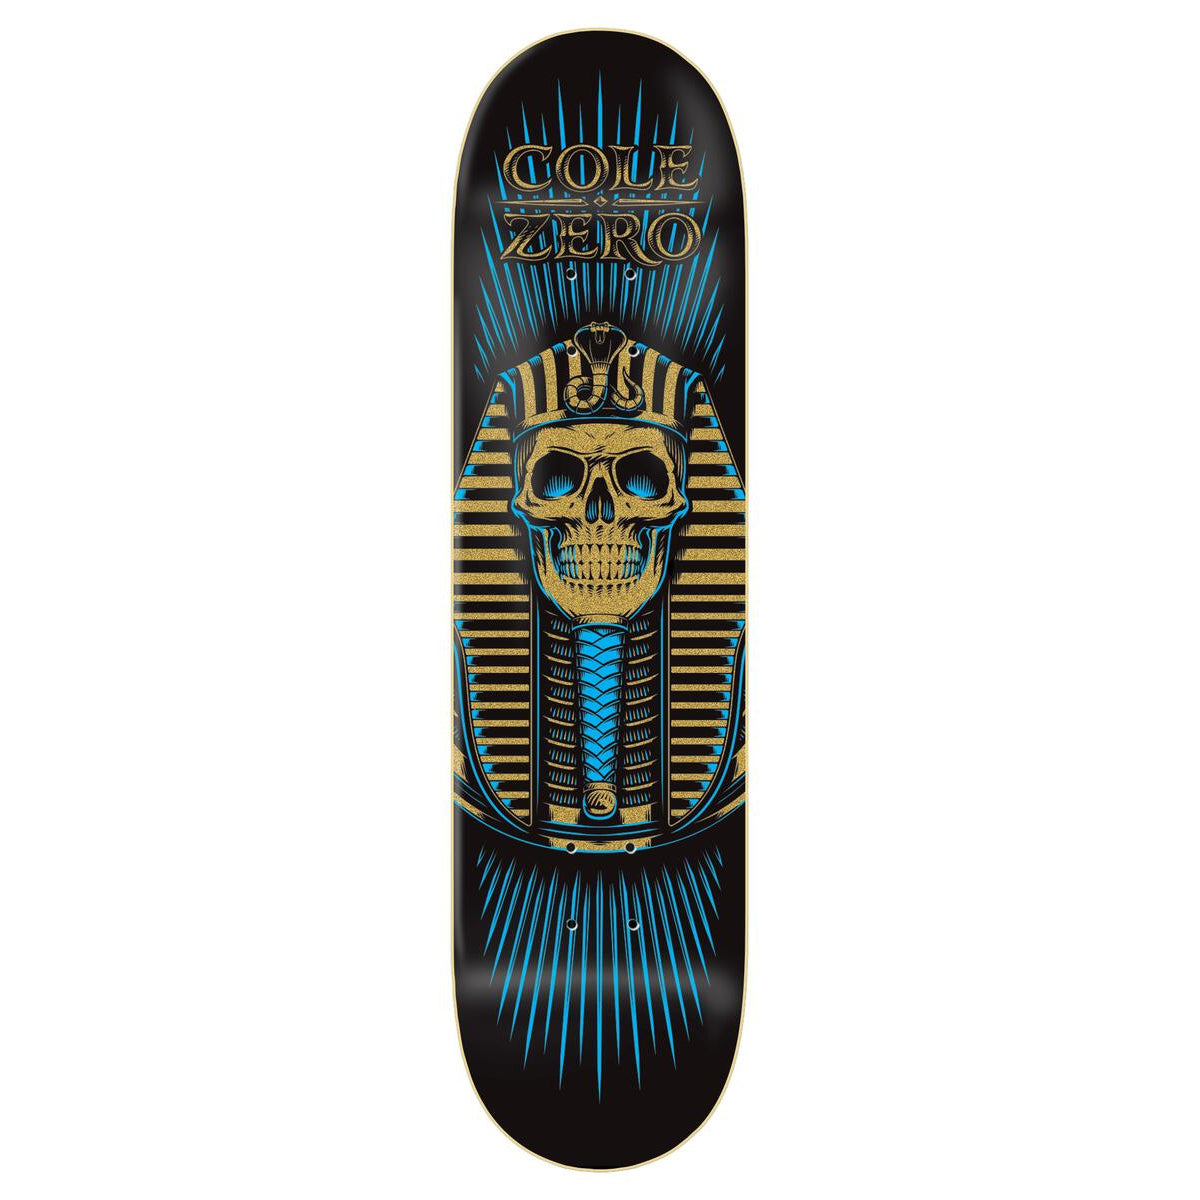 Chris Cole Pharaoh Zero Skateboard Deck